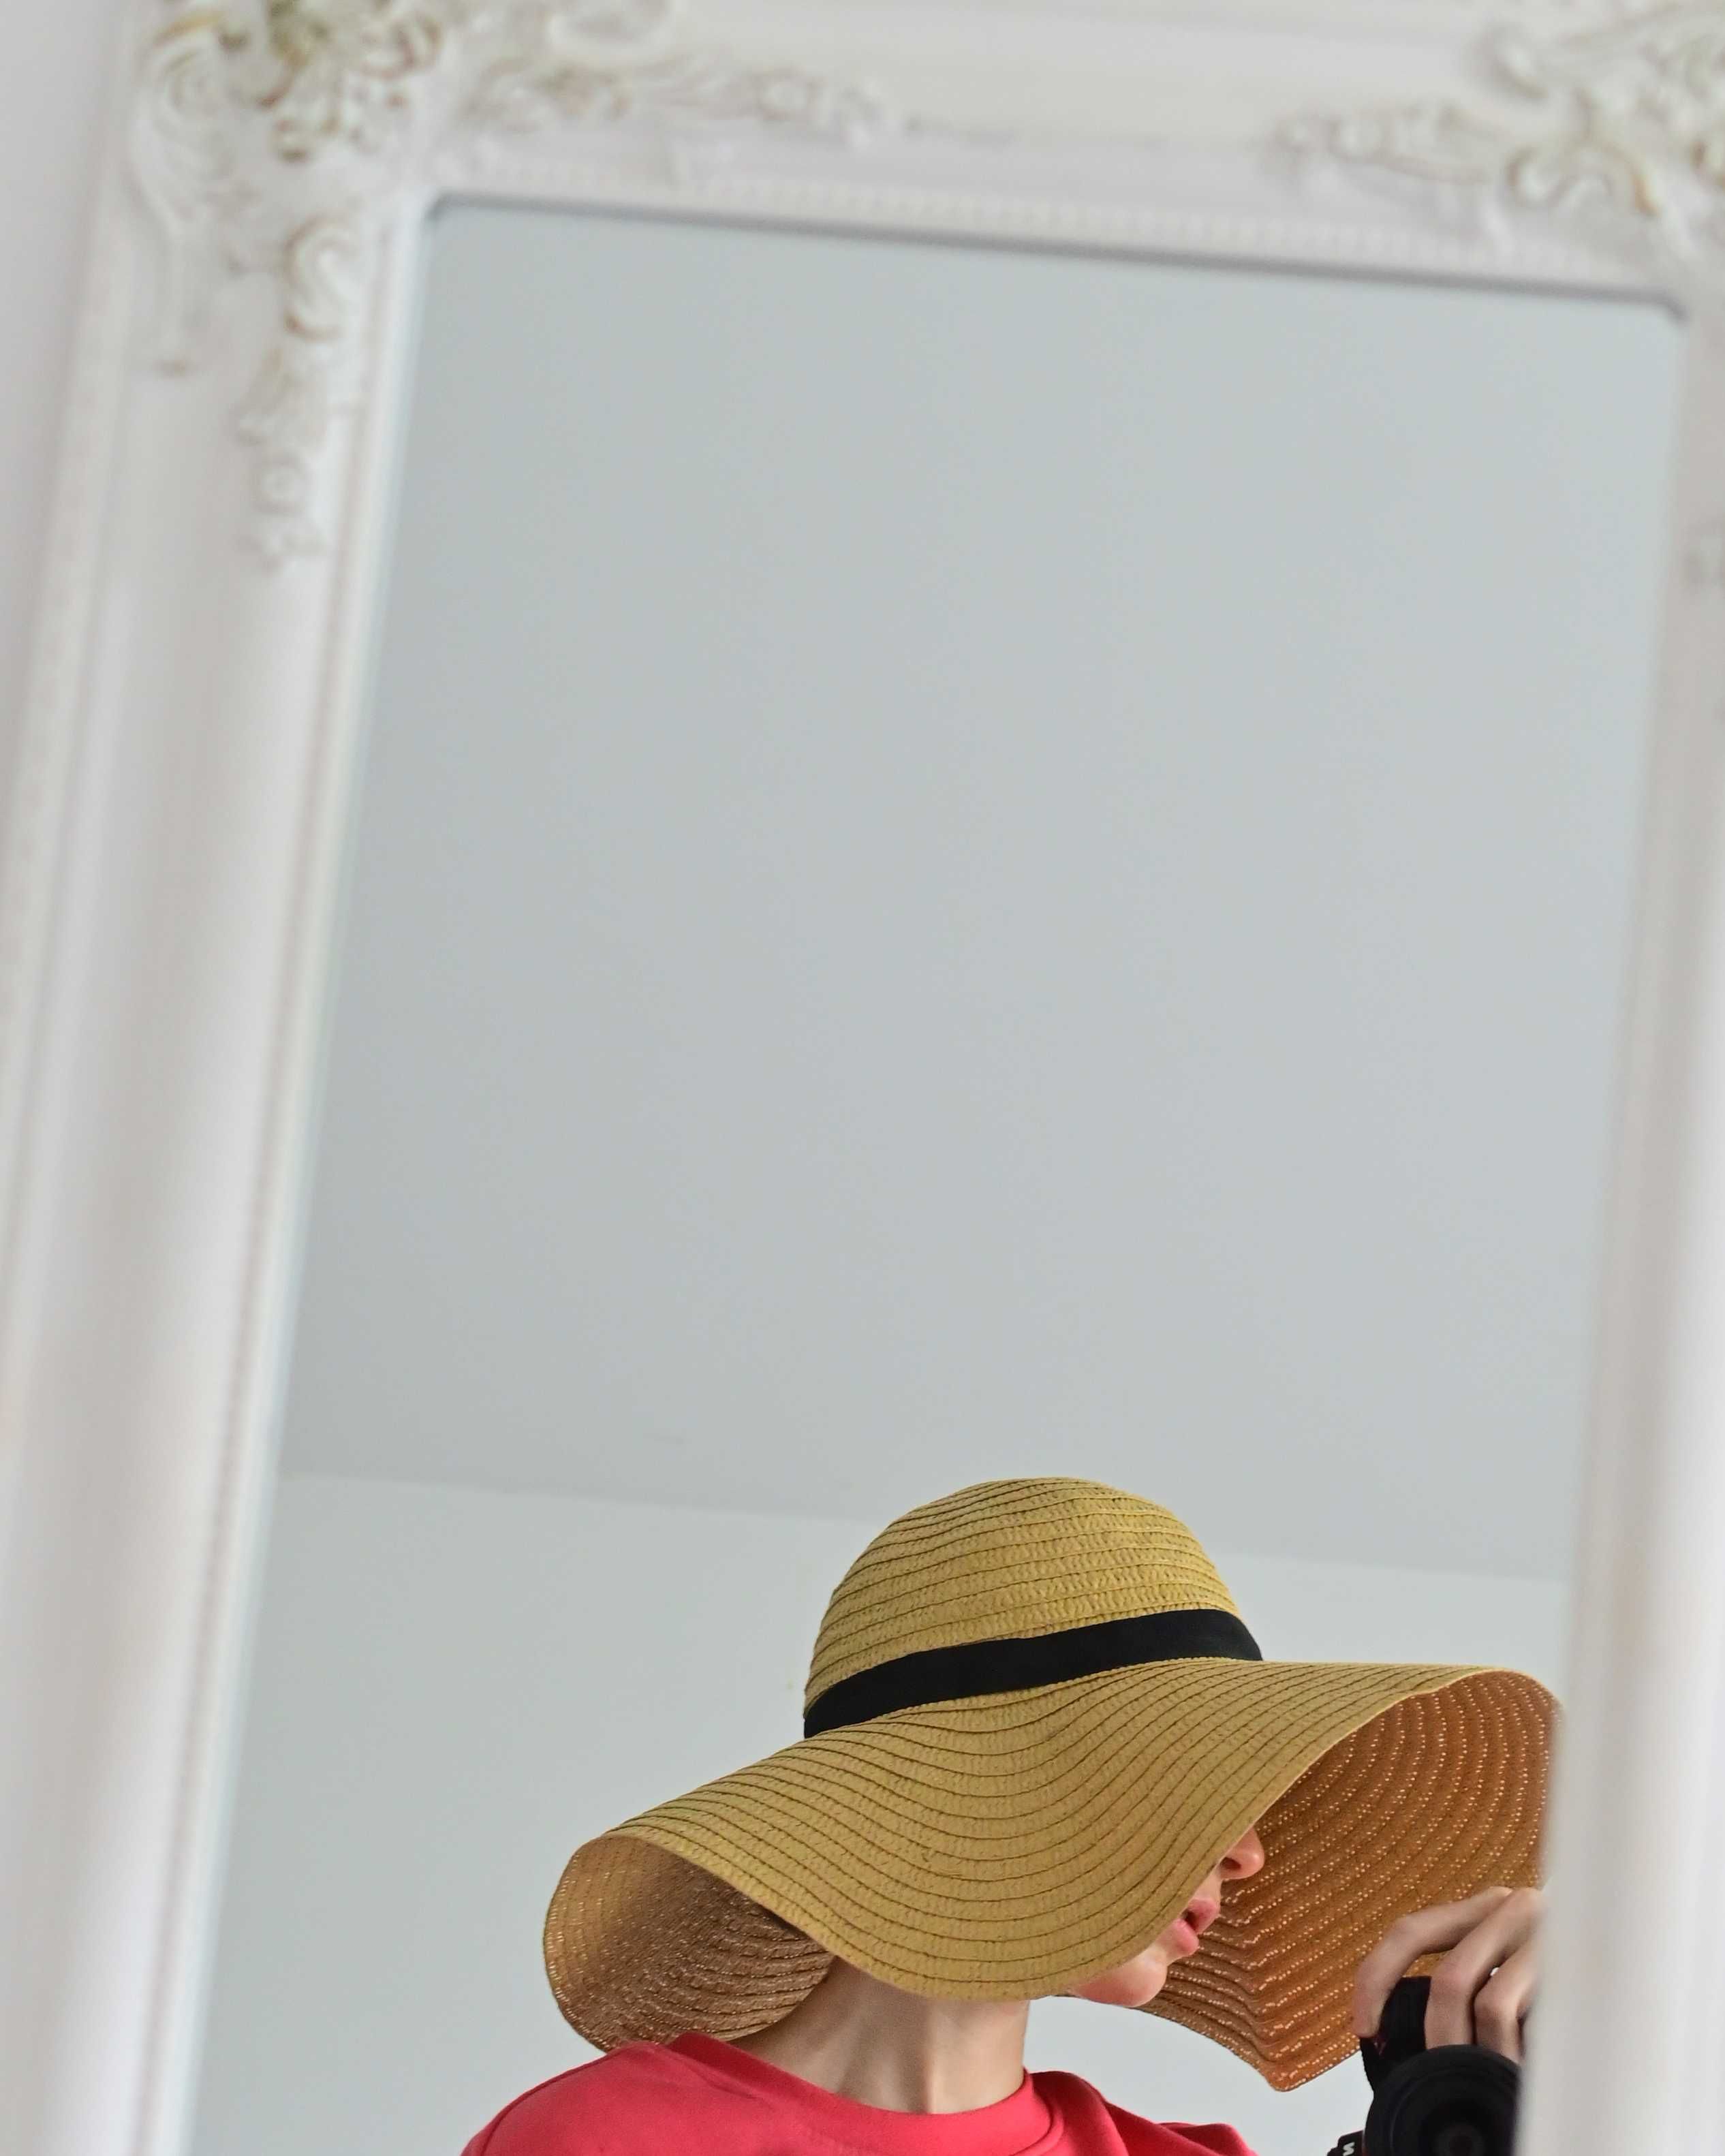 Капелюх солом'яний. Zara шляпа соломенная шляпа